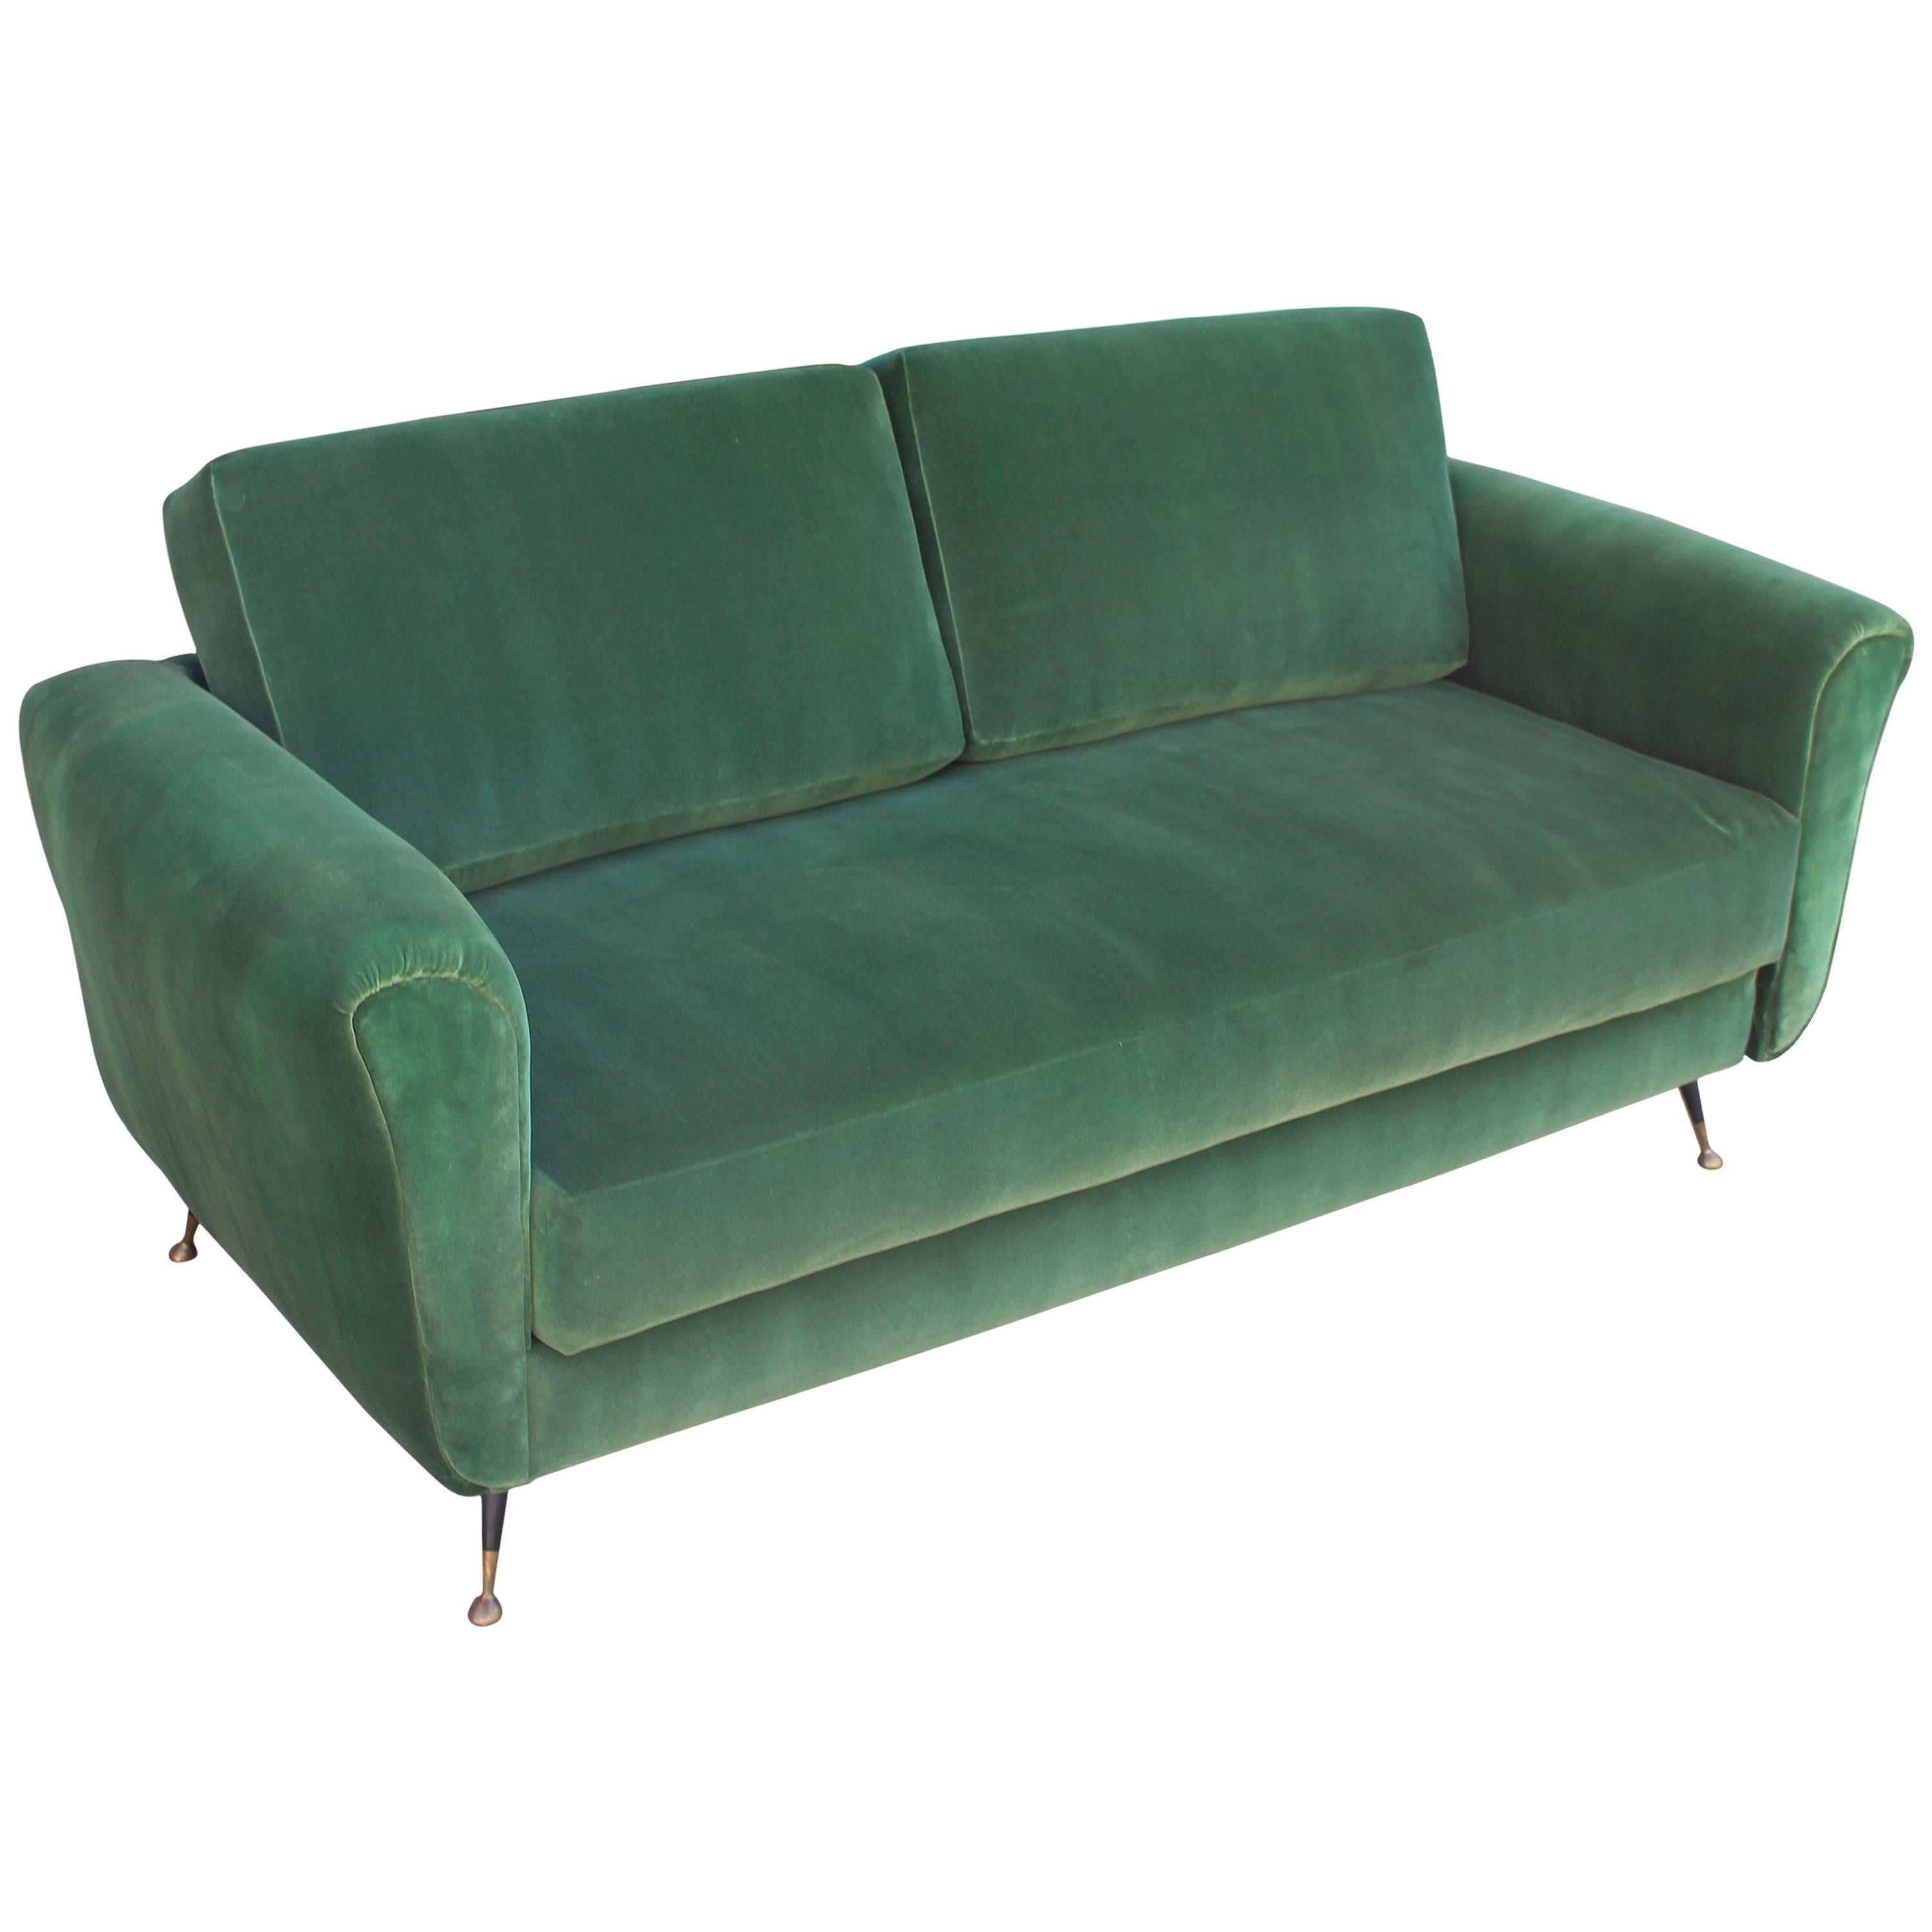 Italian Sofa or Daybed 1950s Design